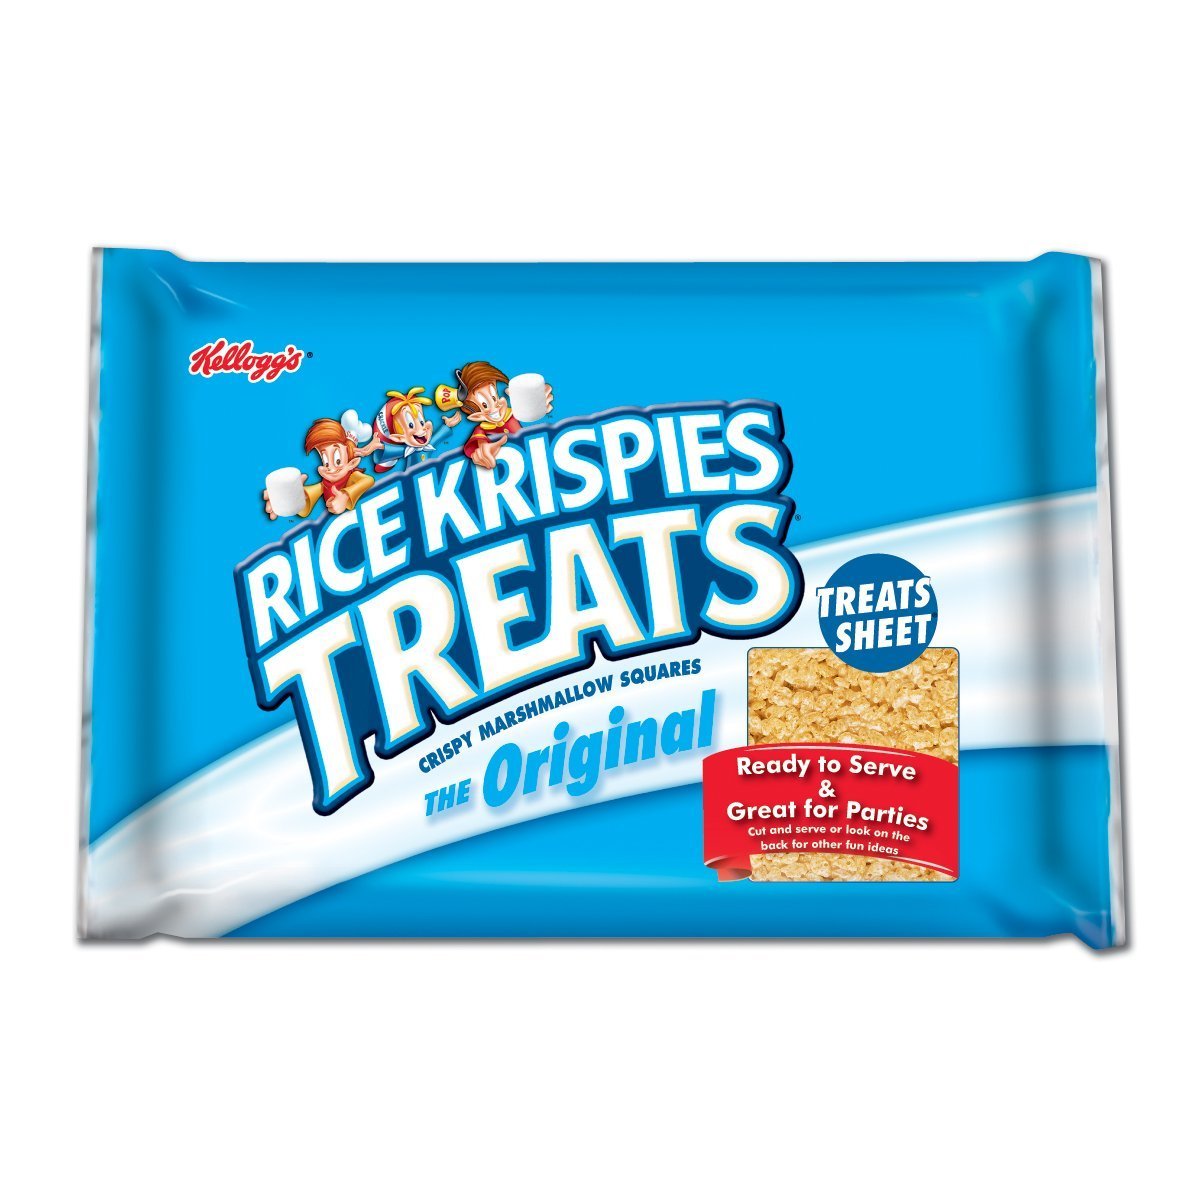 Kellogg’s Rice Krispies Treats Sheet Only $6.39 Shipped!